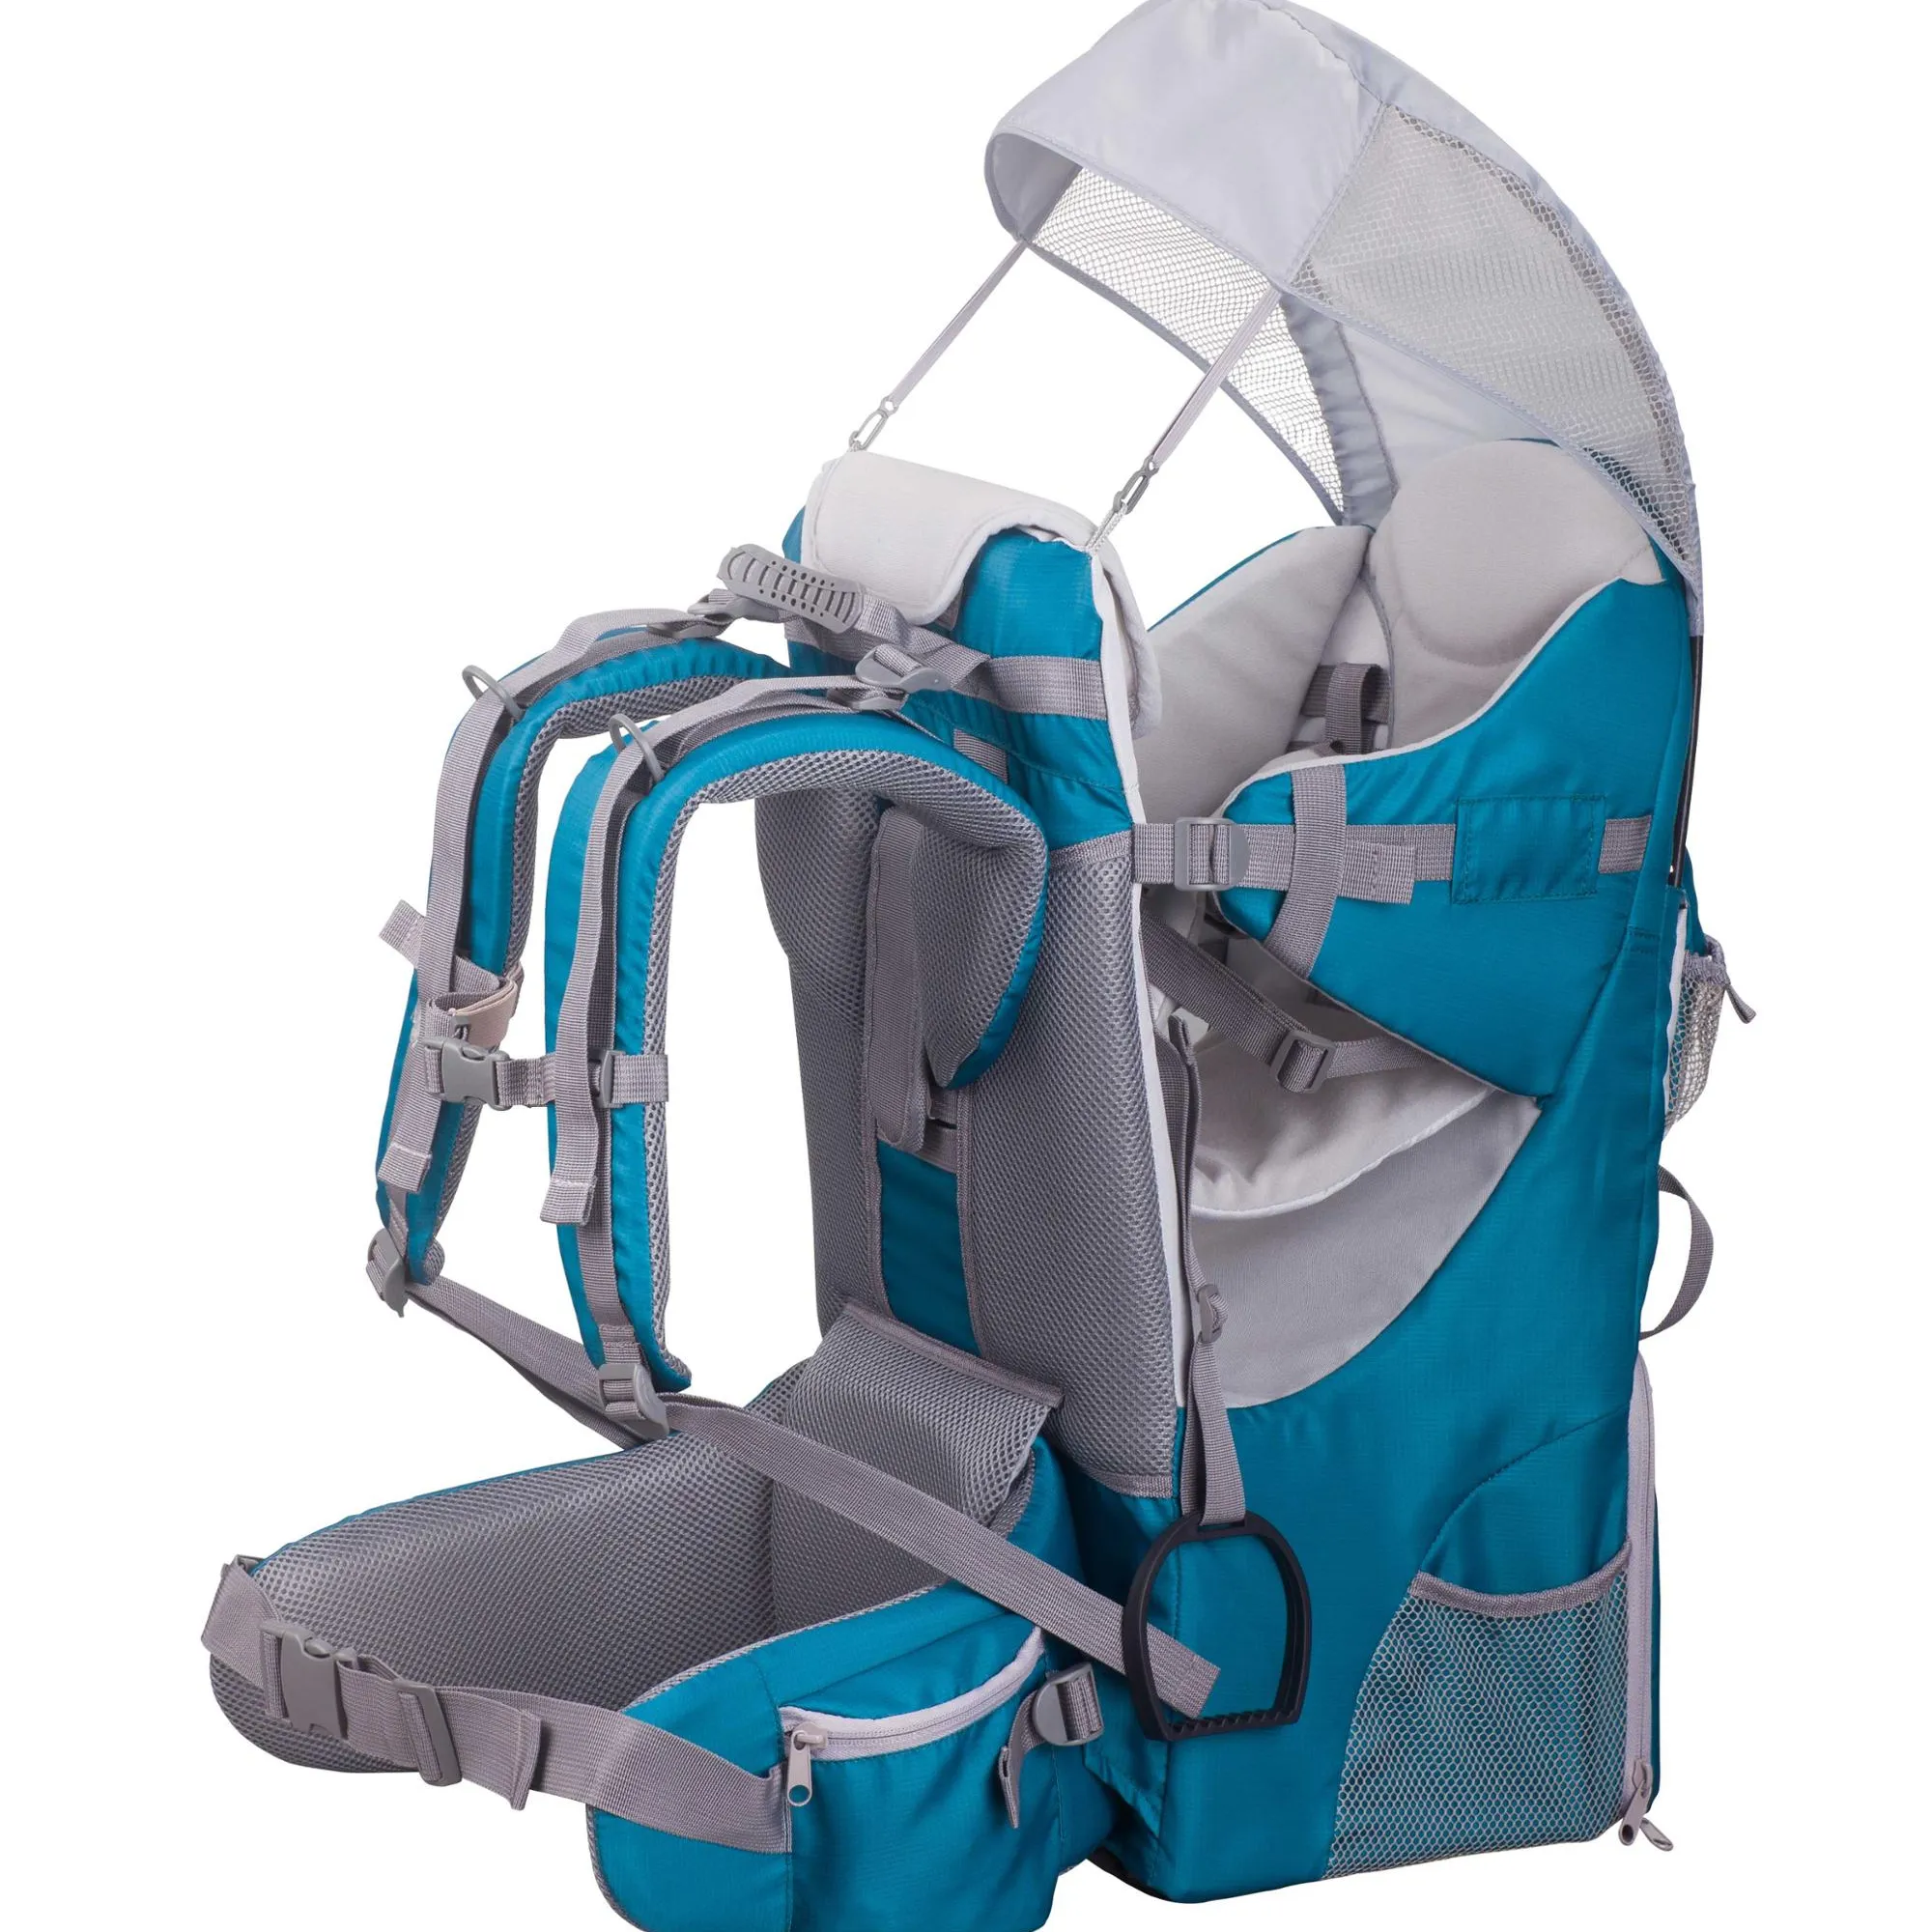 Kinder <span class=keywords><strong>Träger</strong></span>/baby rucksack (mit EN13209 zertifikat) baby produkt